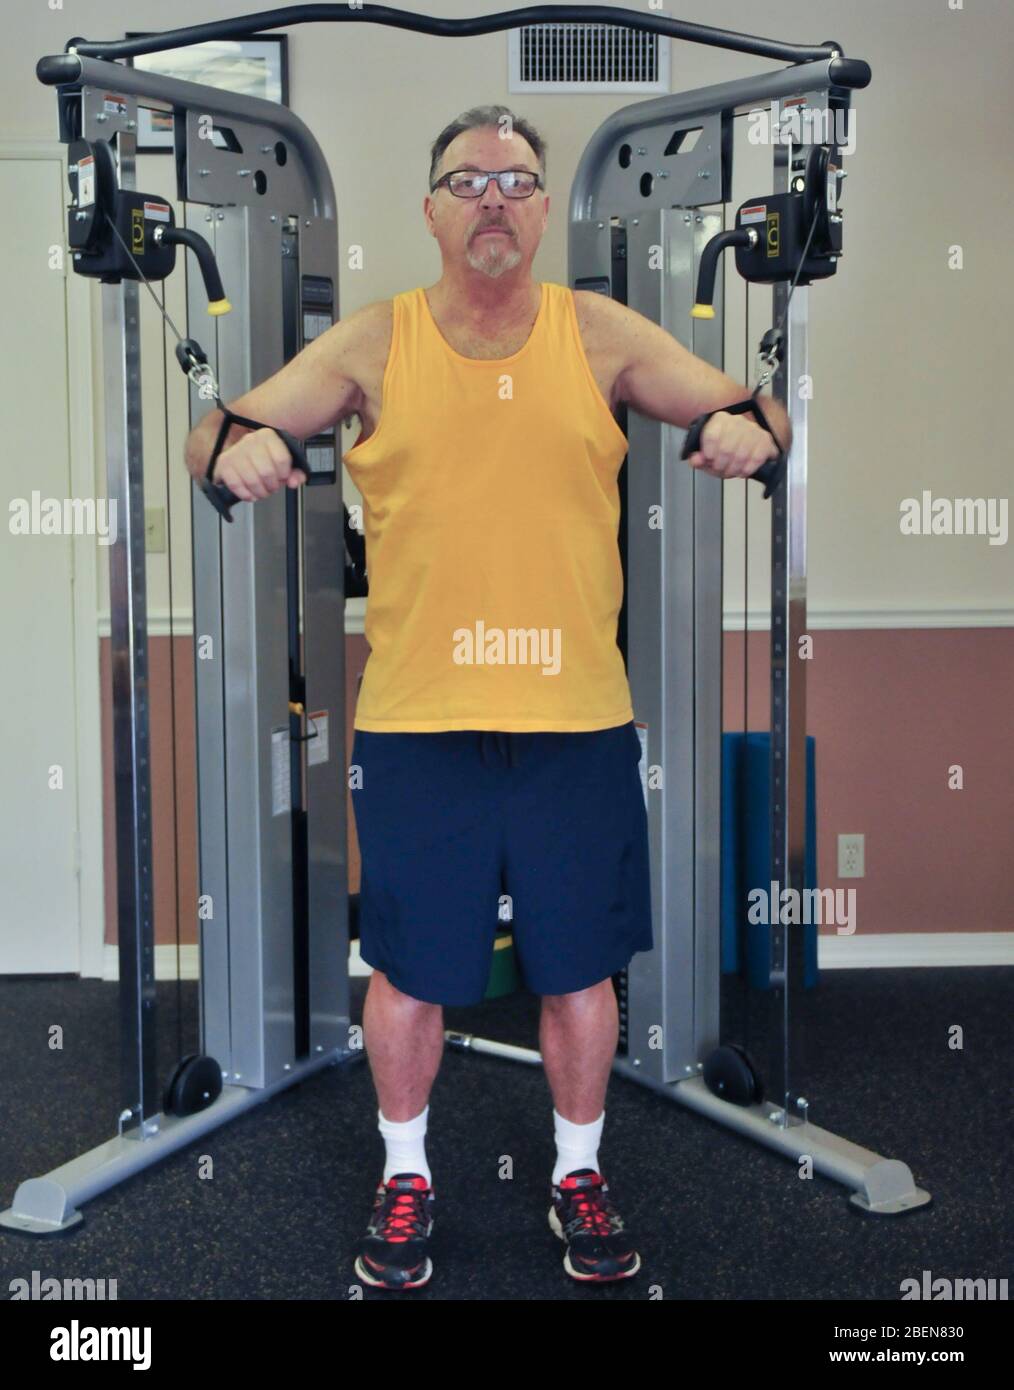 Male senior citizen exercising in a gym Stock Photo